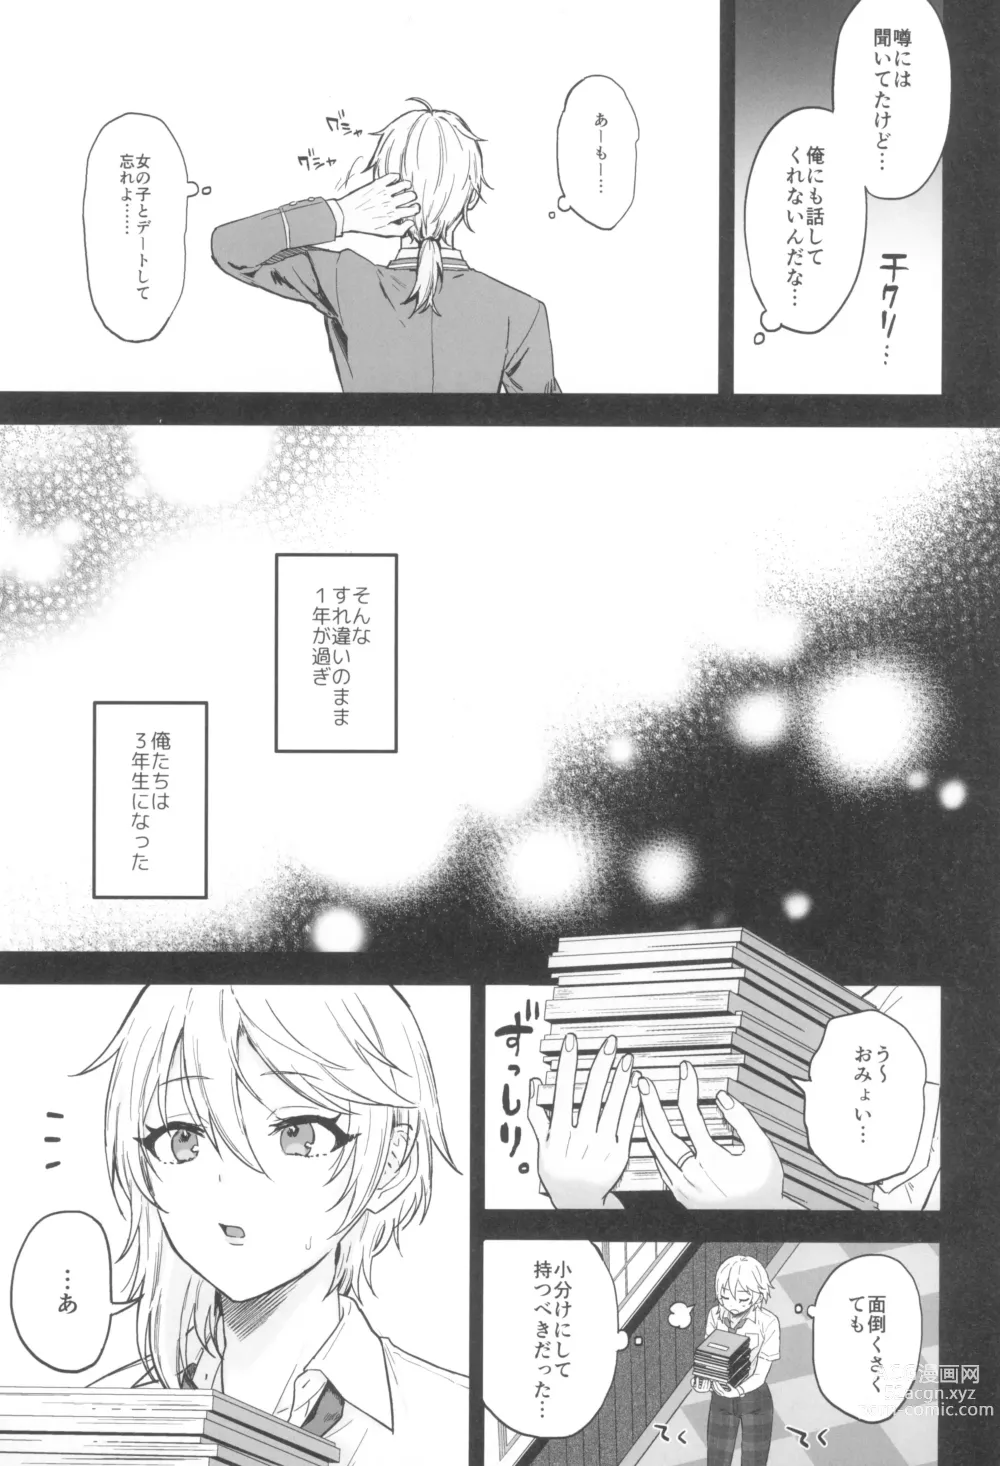 Page 23 of doujinshi Kore made mo korekara mo